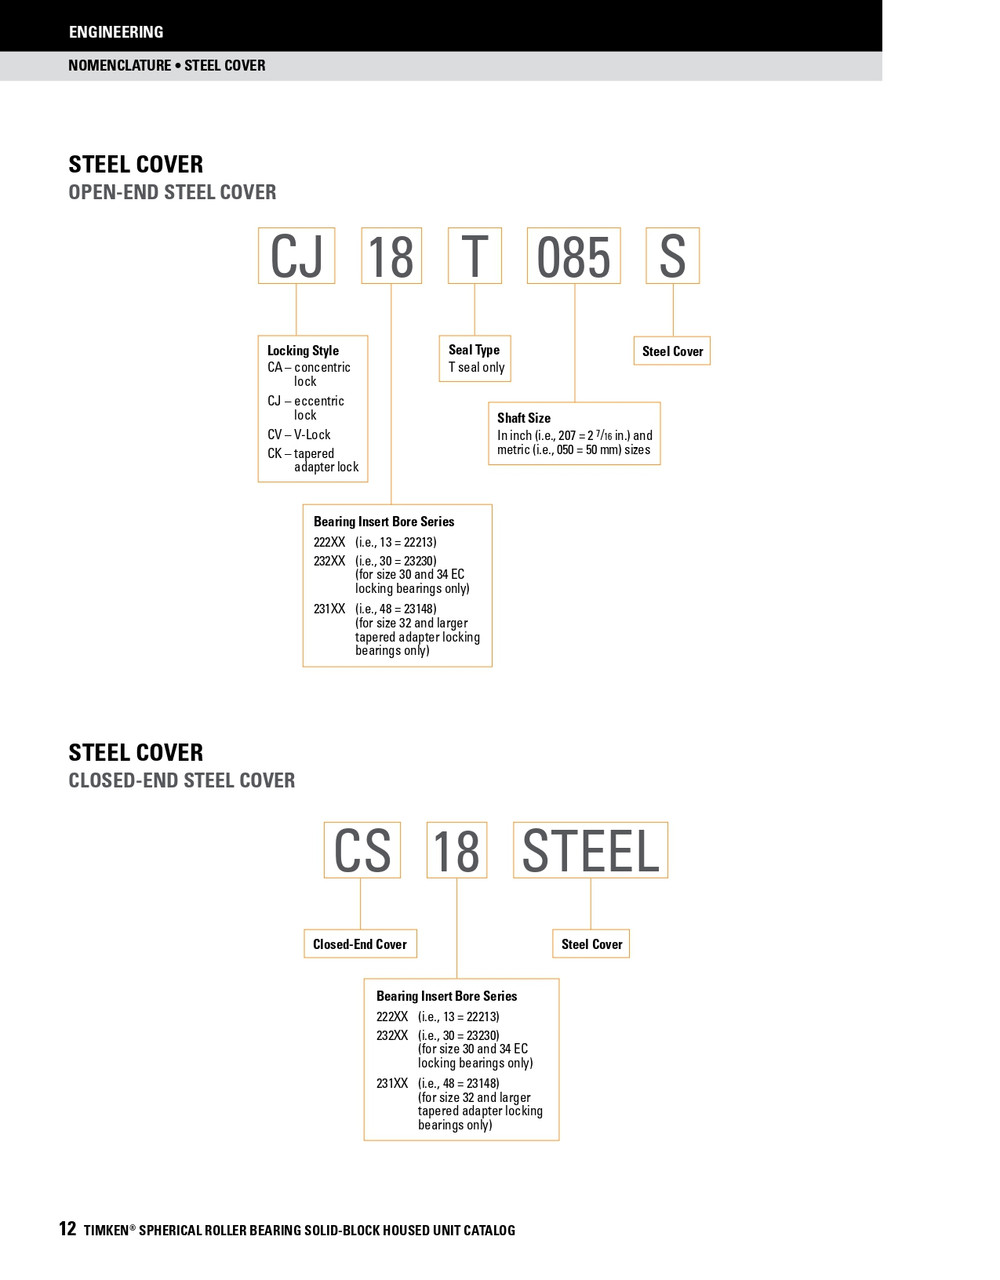 2-1/2" Timken SRB Steel Open End Cover w/Teflon Seal - QV V-Lock® Type   CV14T208SNP